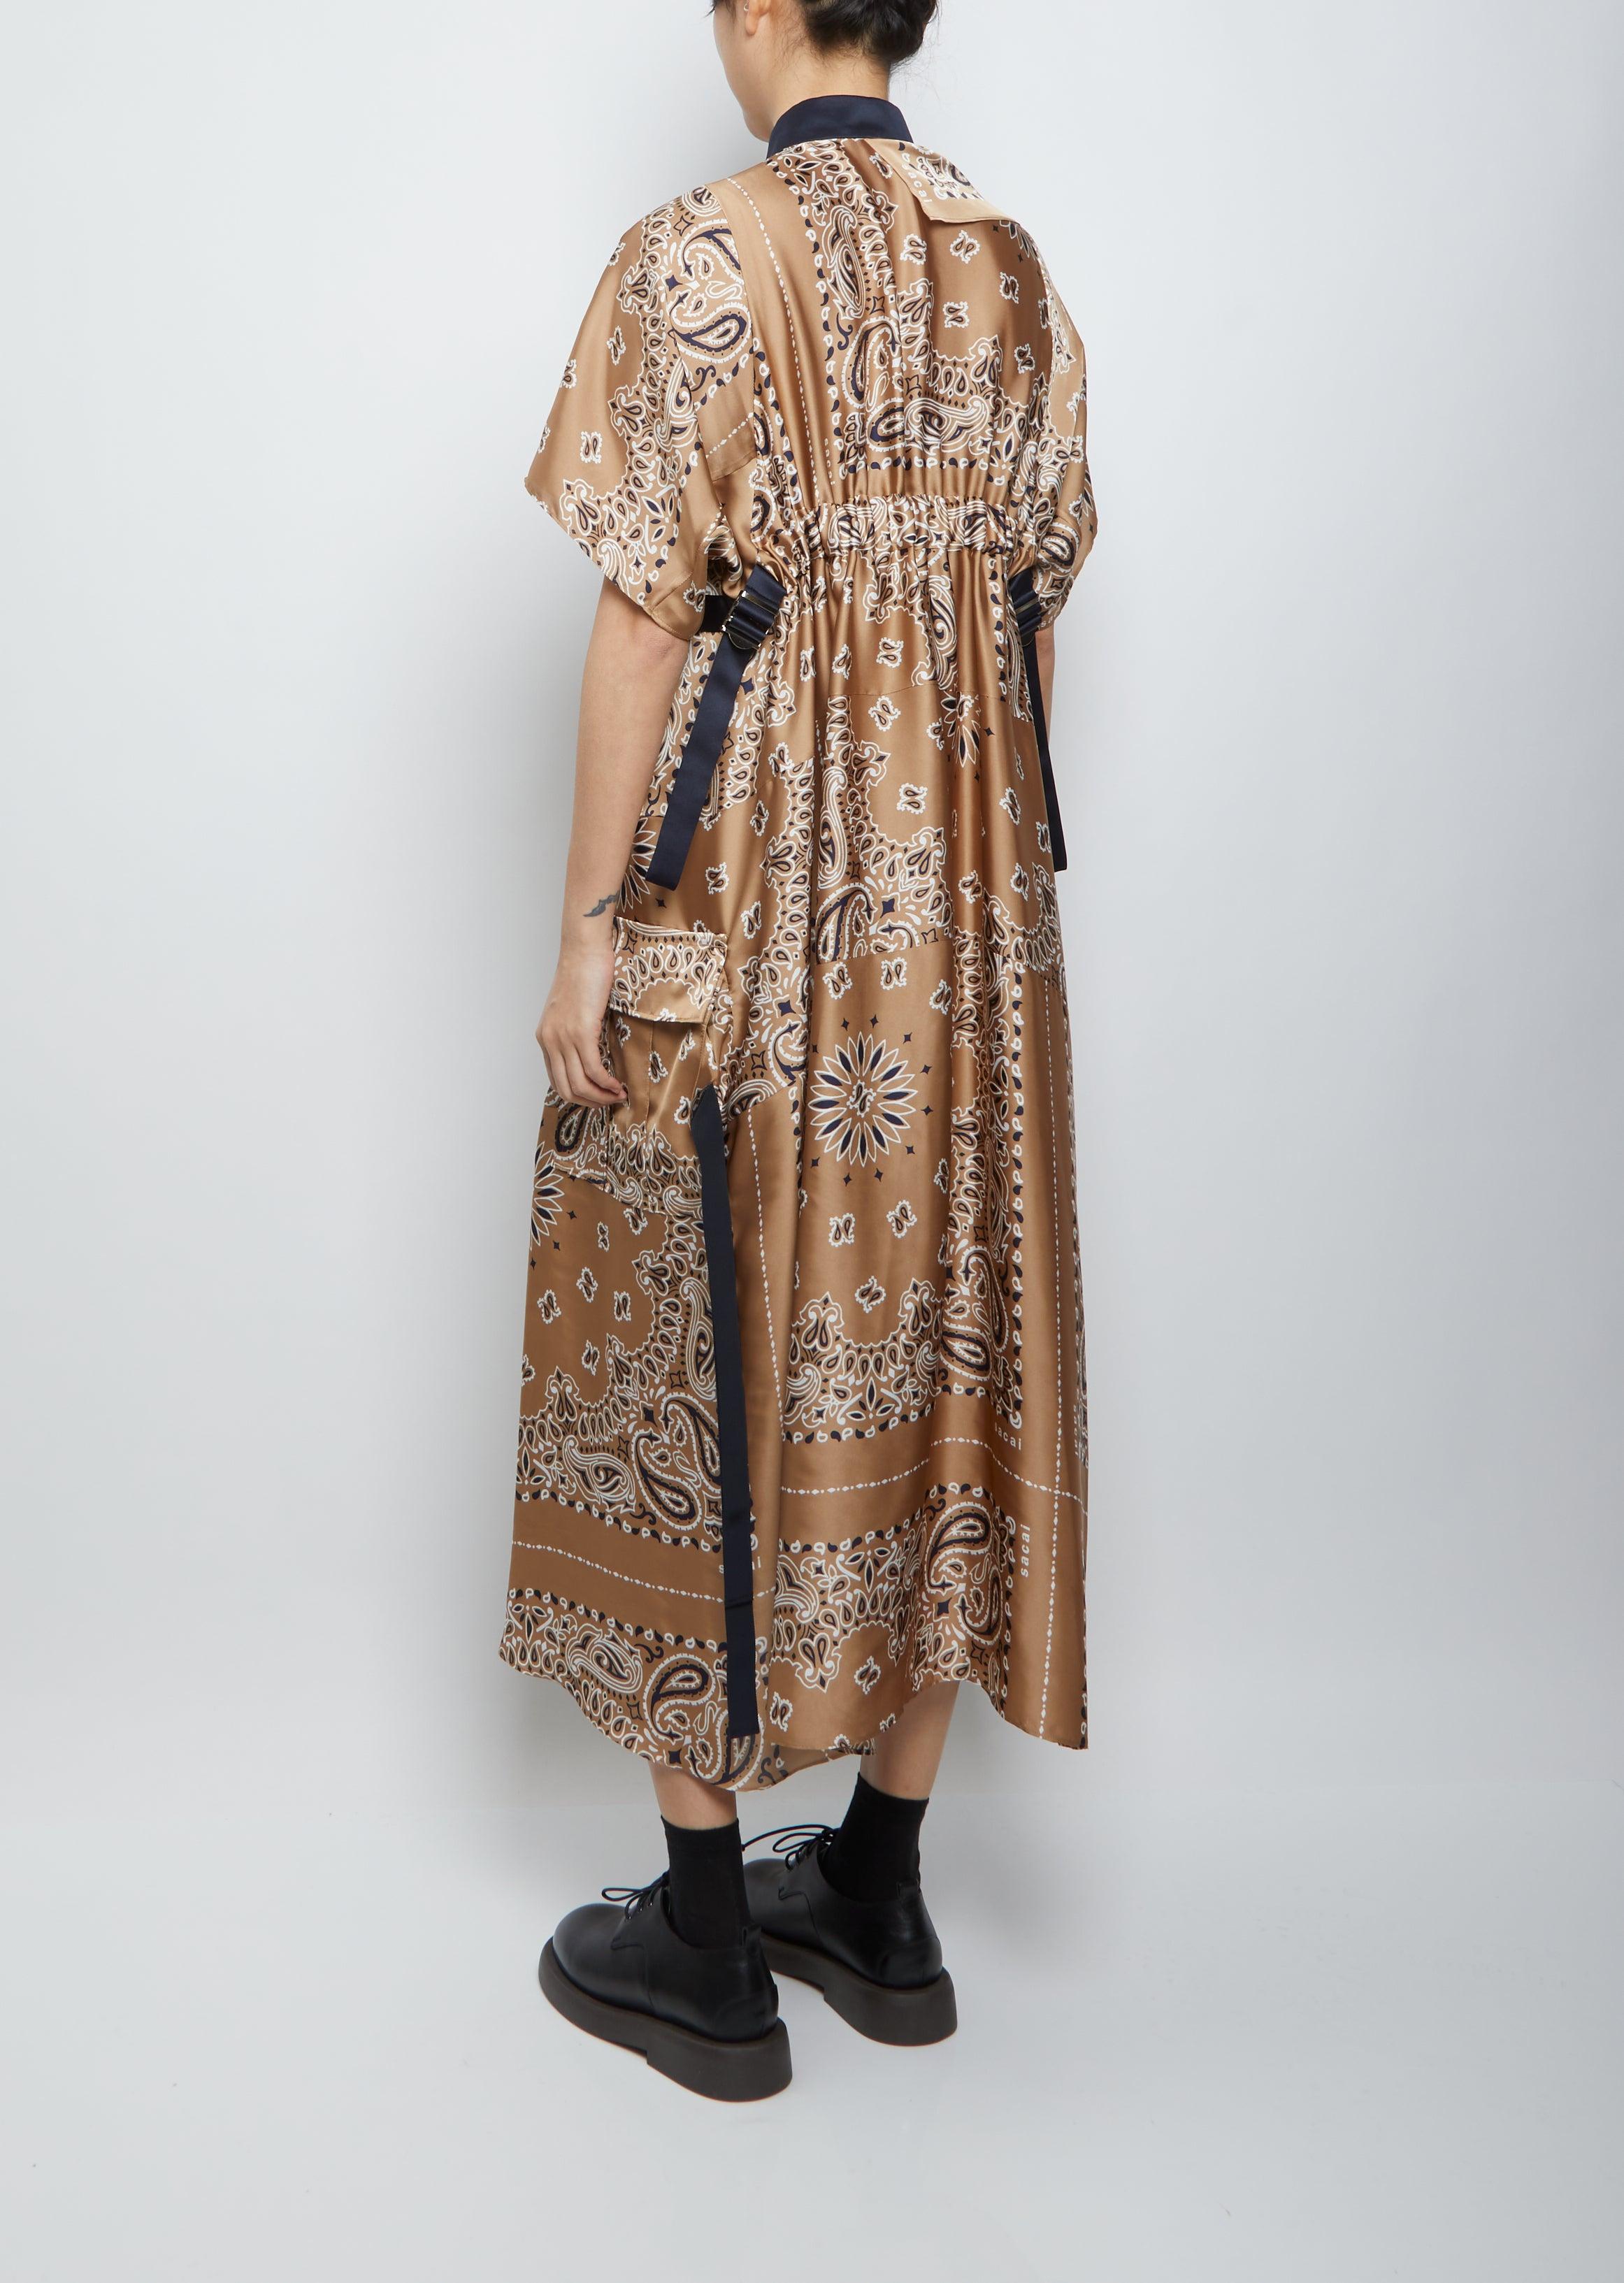 Sacai Bandana Print Dress in Natural | Lyst